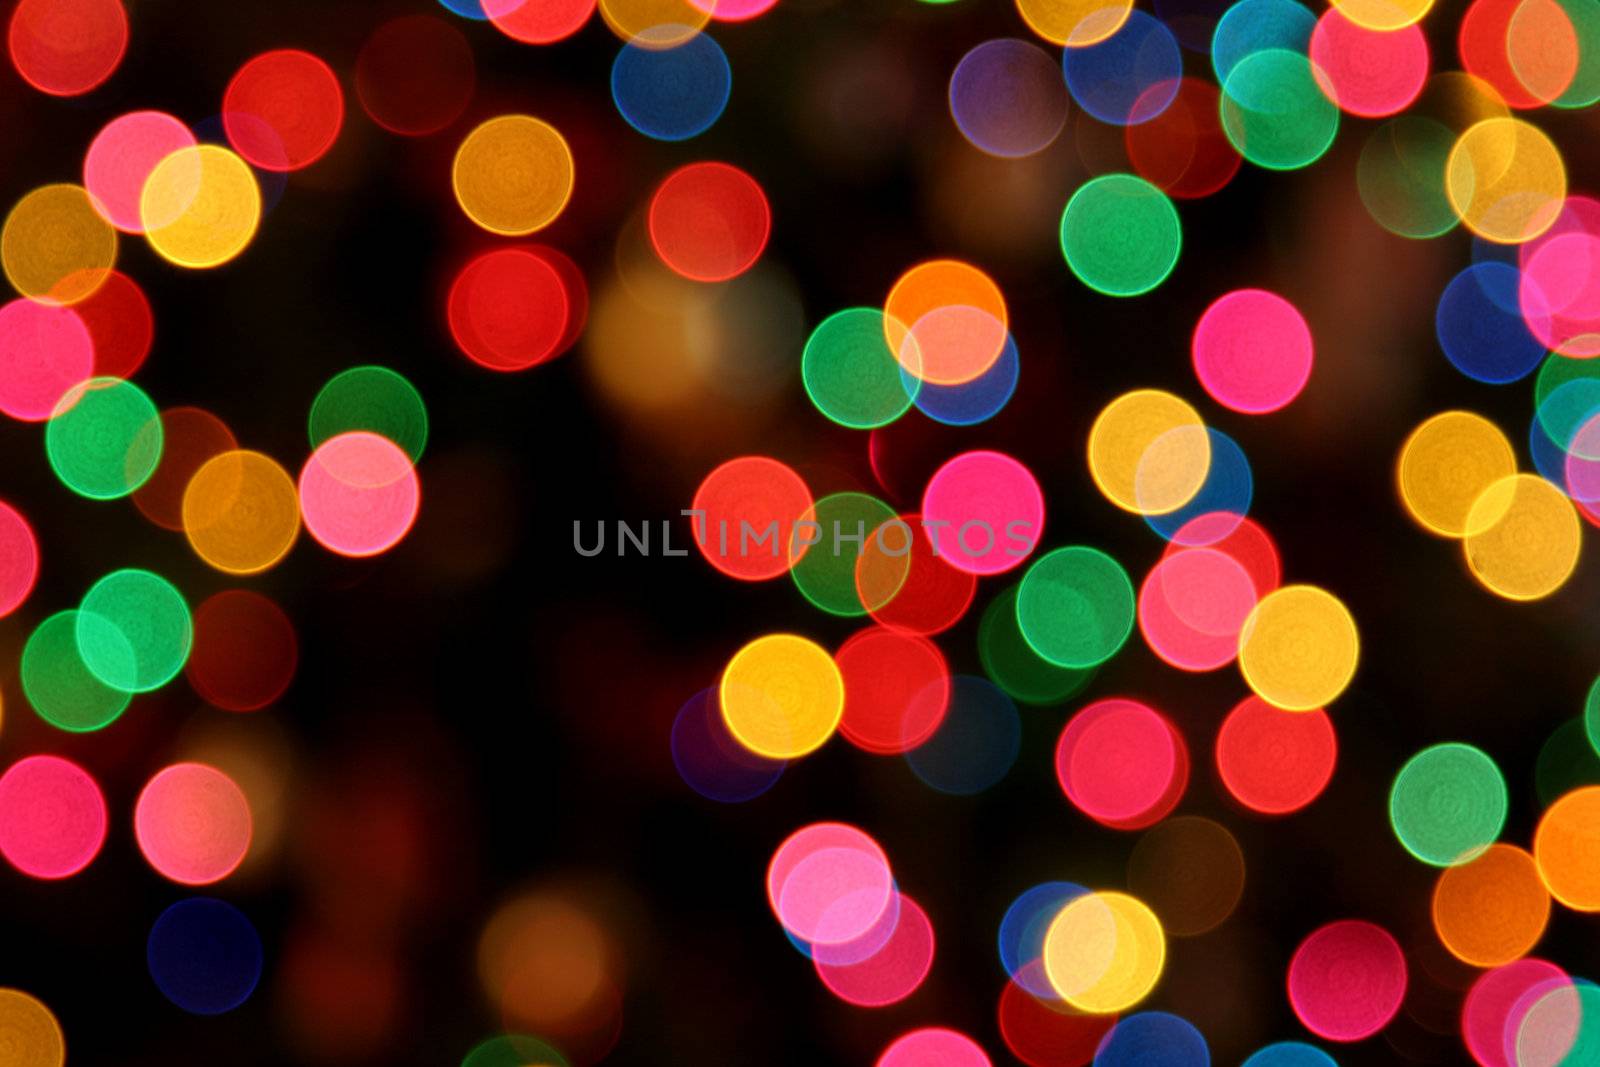 A defocused shot of Christmas lights.